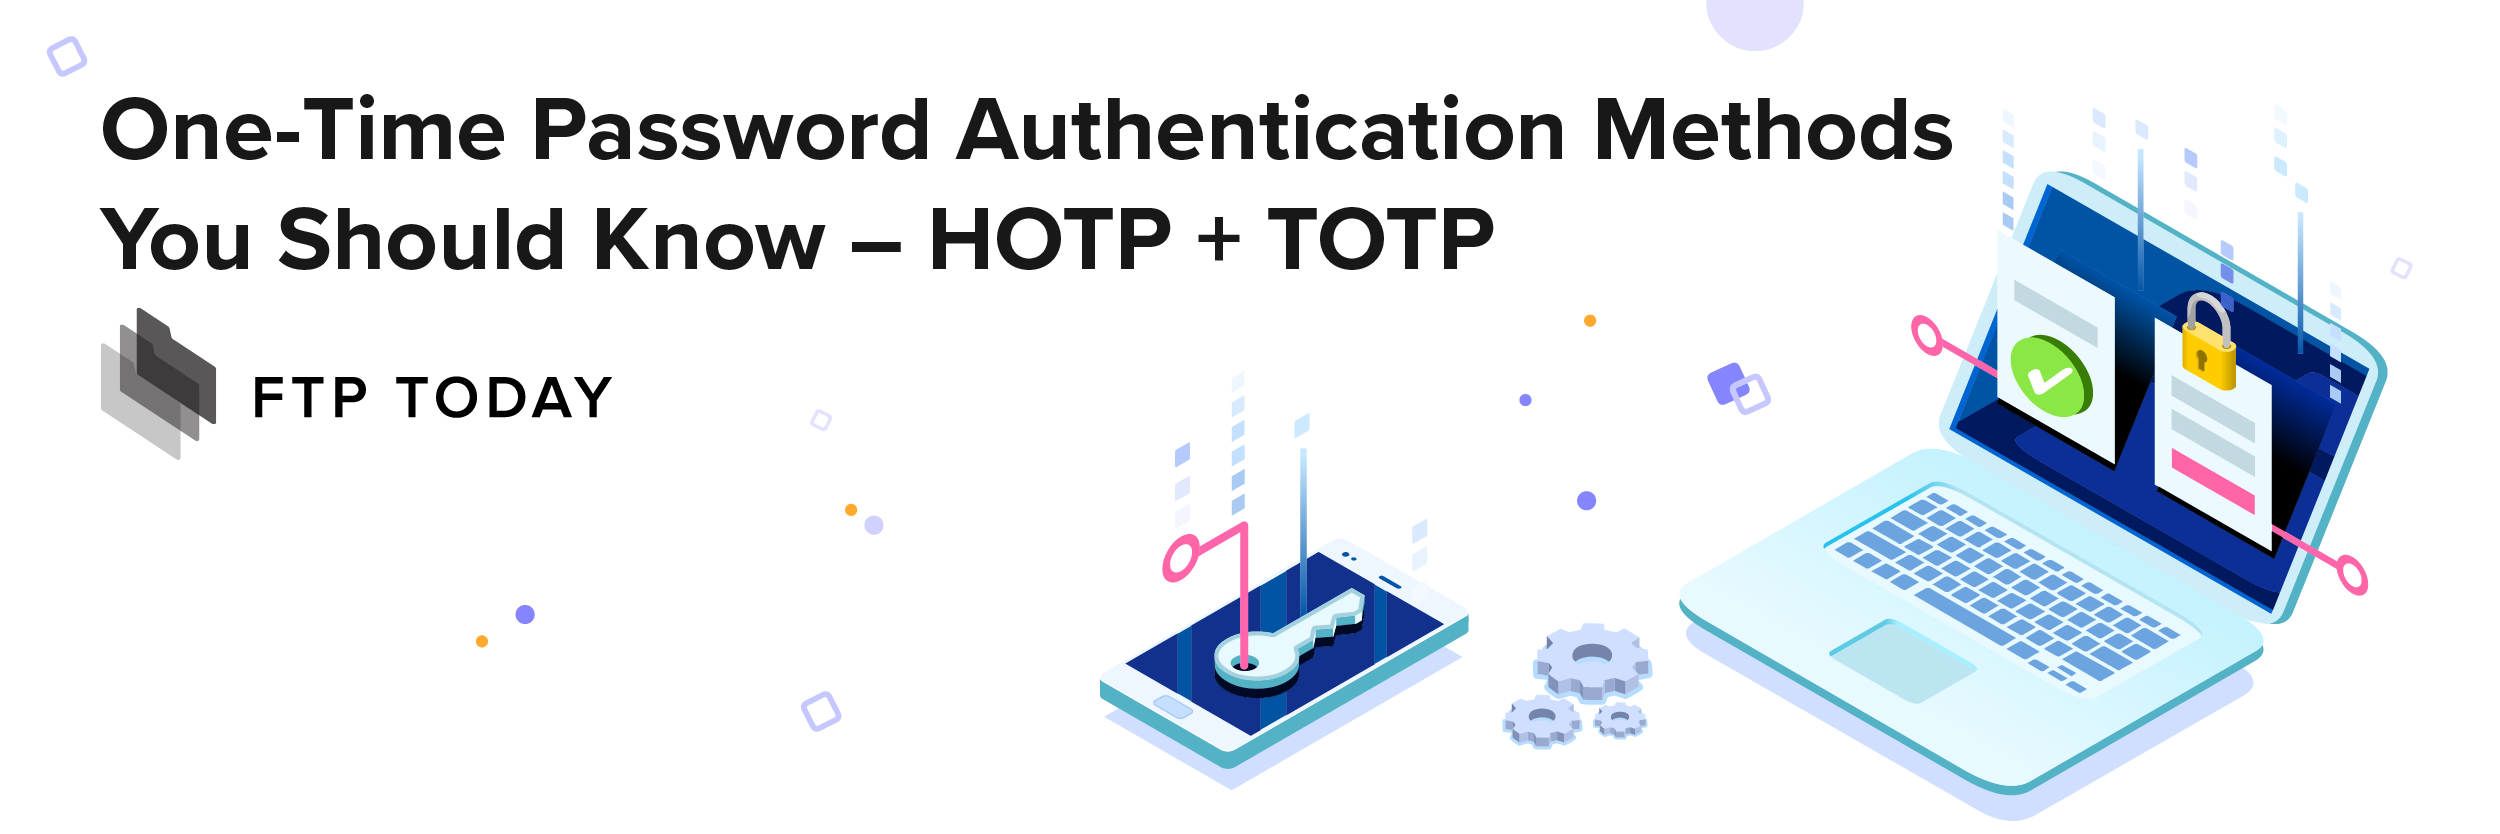 google authenticator hotp vs totp mode